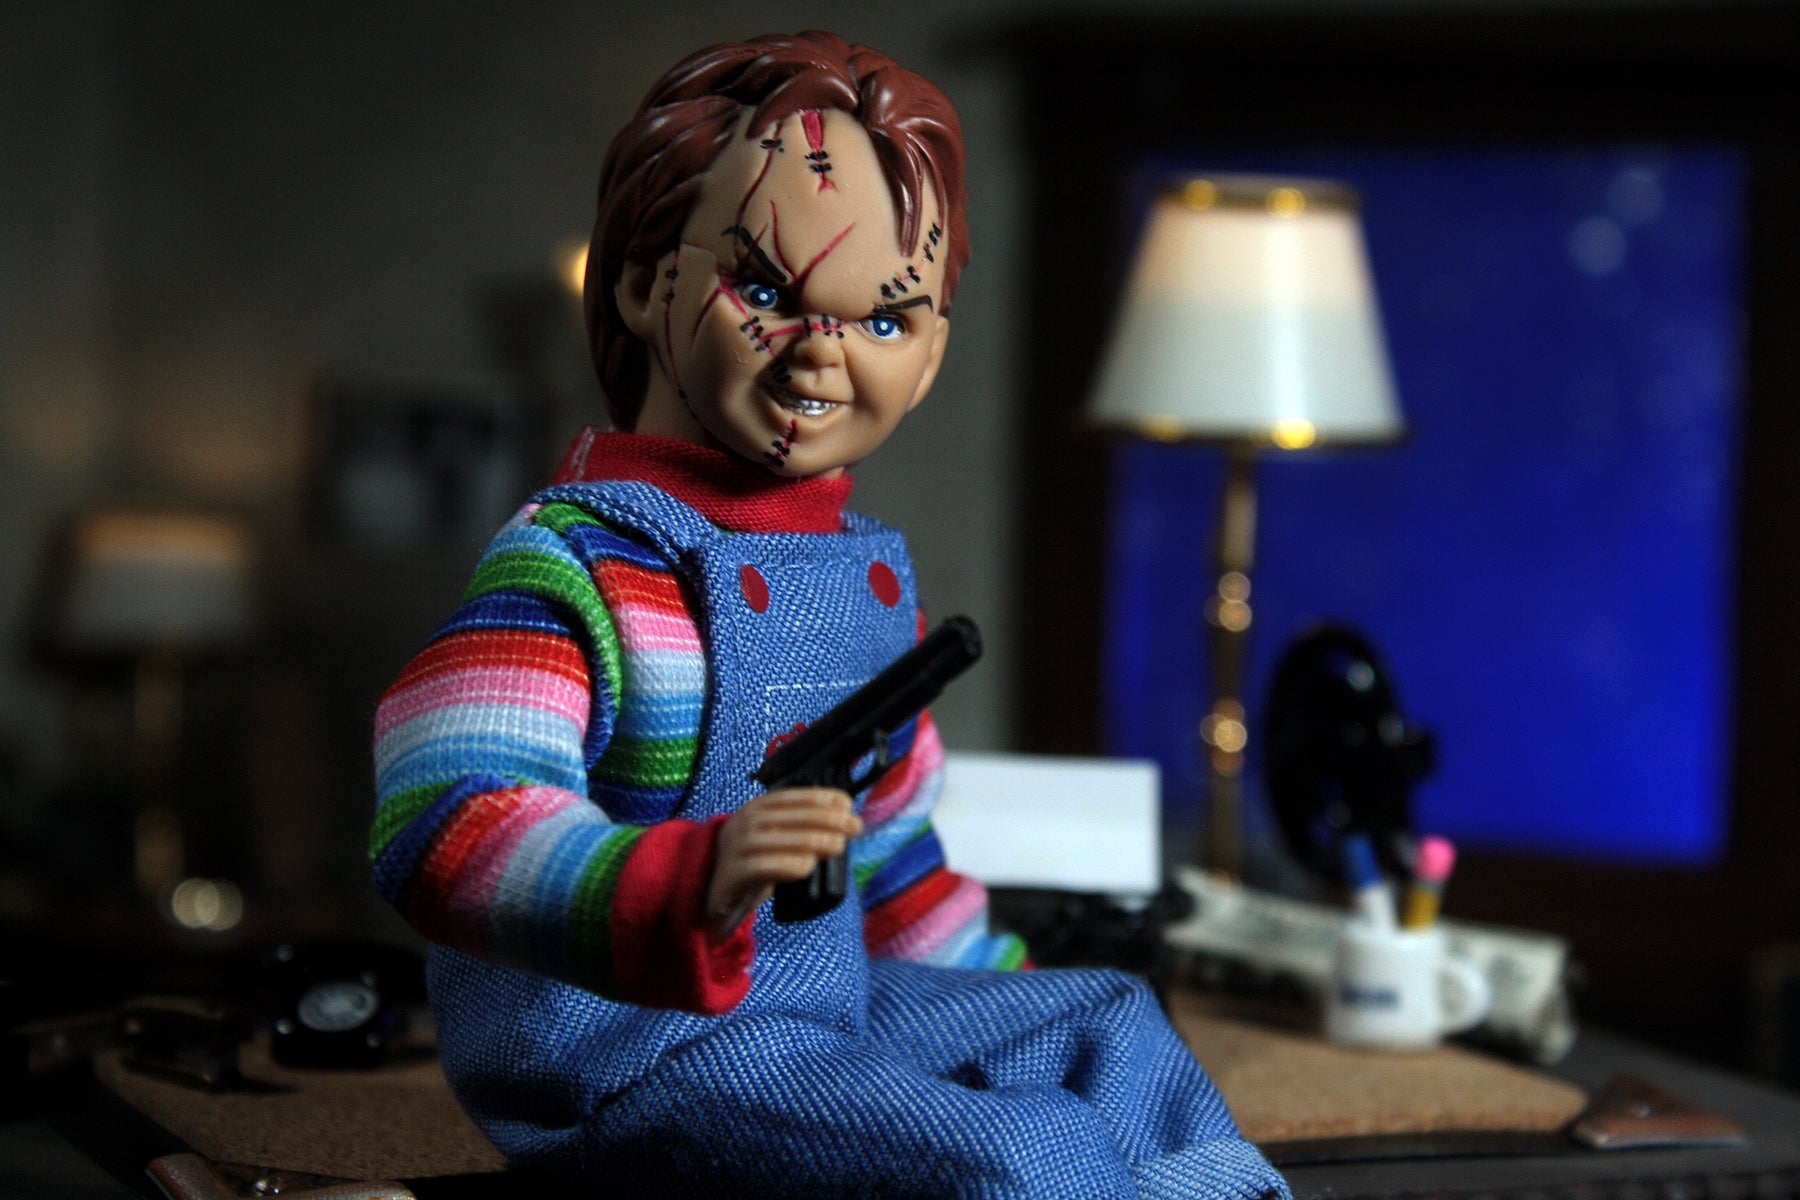 Mego Horror Wave 14 - Chucky 8" Action Figure